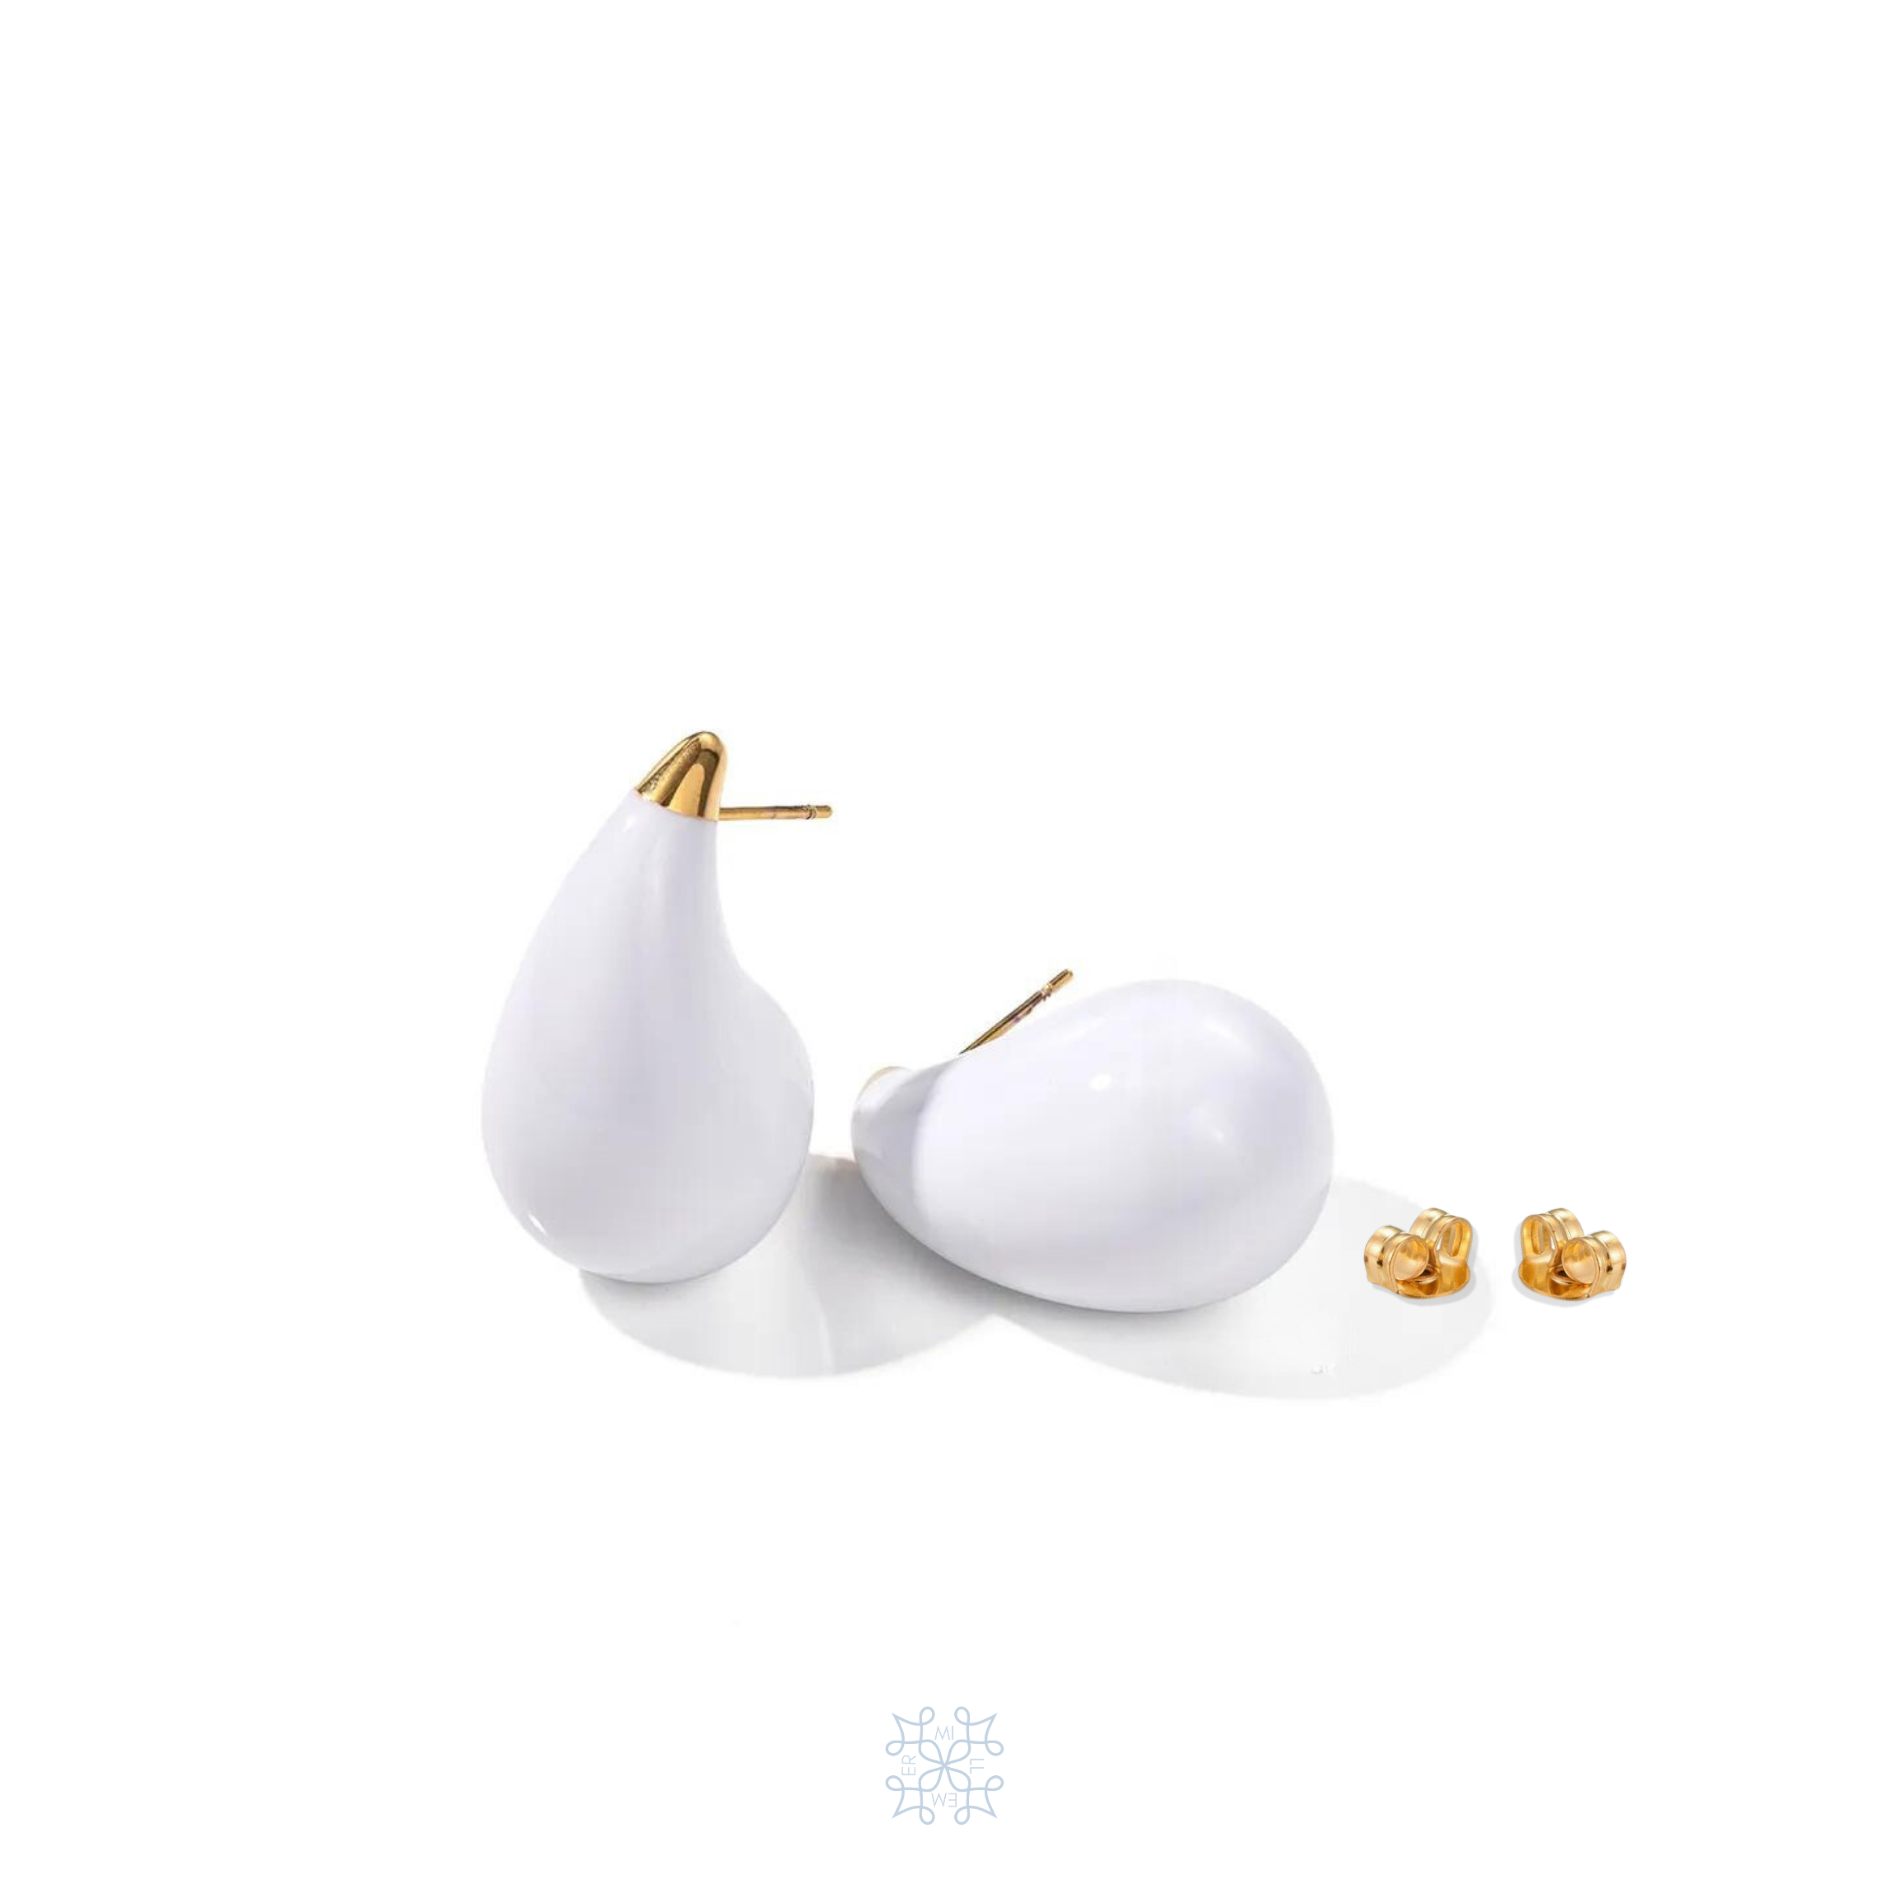 WATERDROP White Enamel Gold Earrings. Gold Earrings in the shape of a waterdrop painted in white enamel all the surface of it.